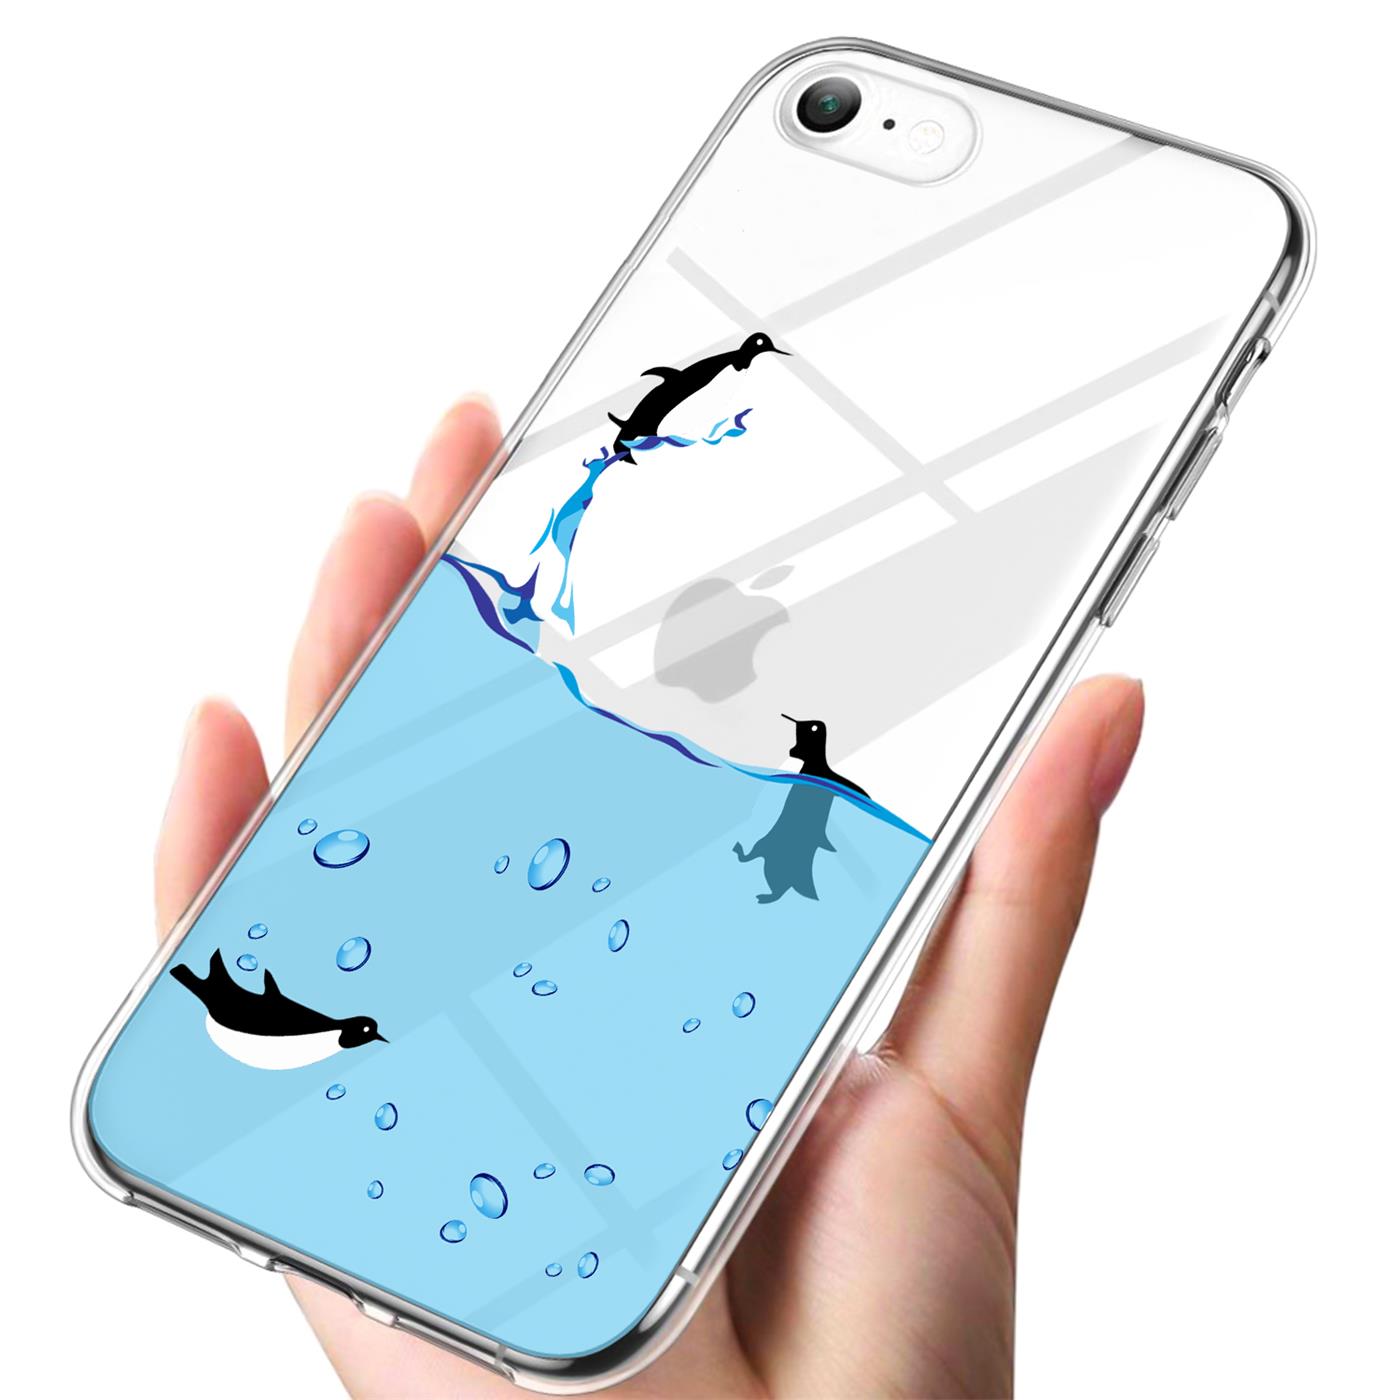 Handy Case für iPhone 7, iPhone 8 Hülle Silikon Muster Schutz Cover